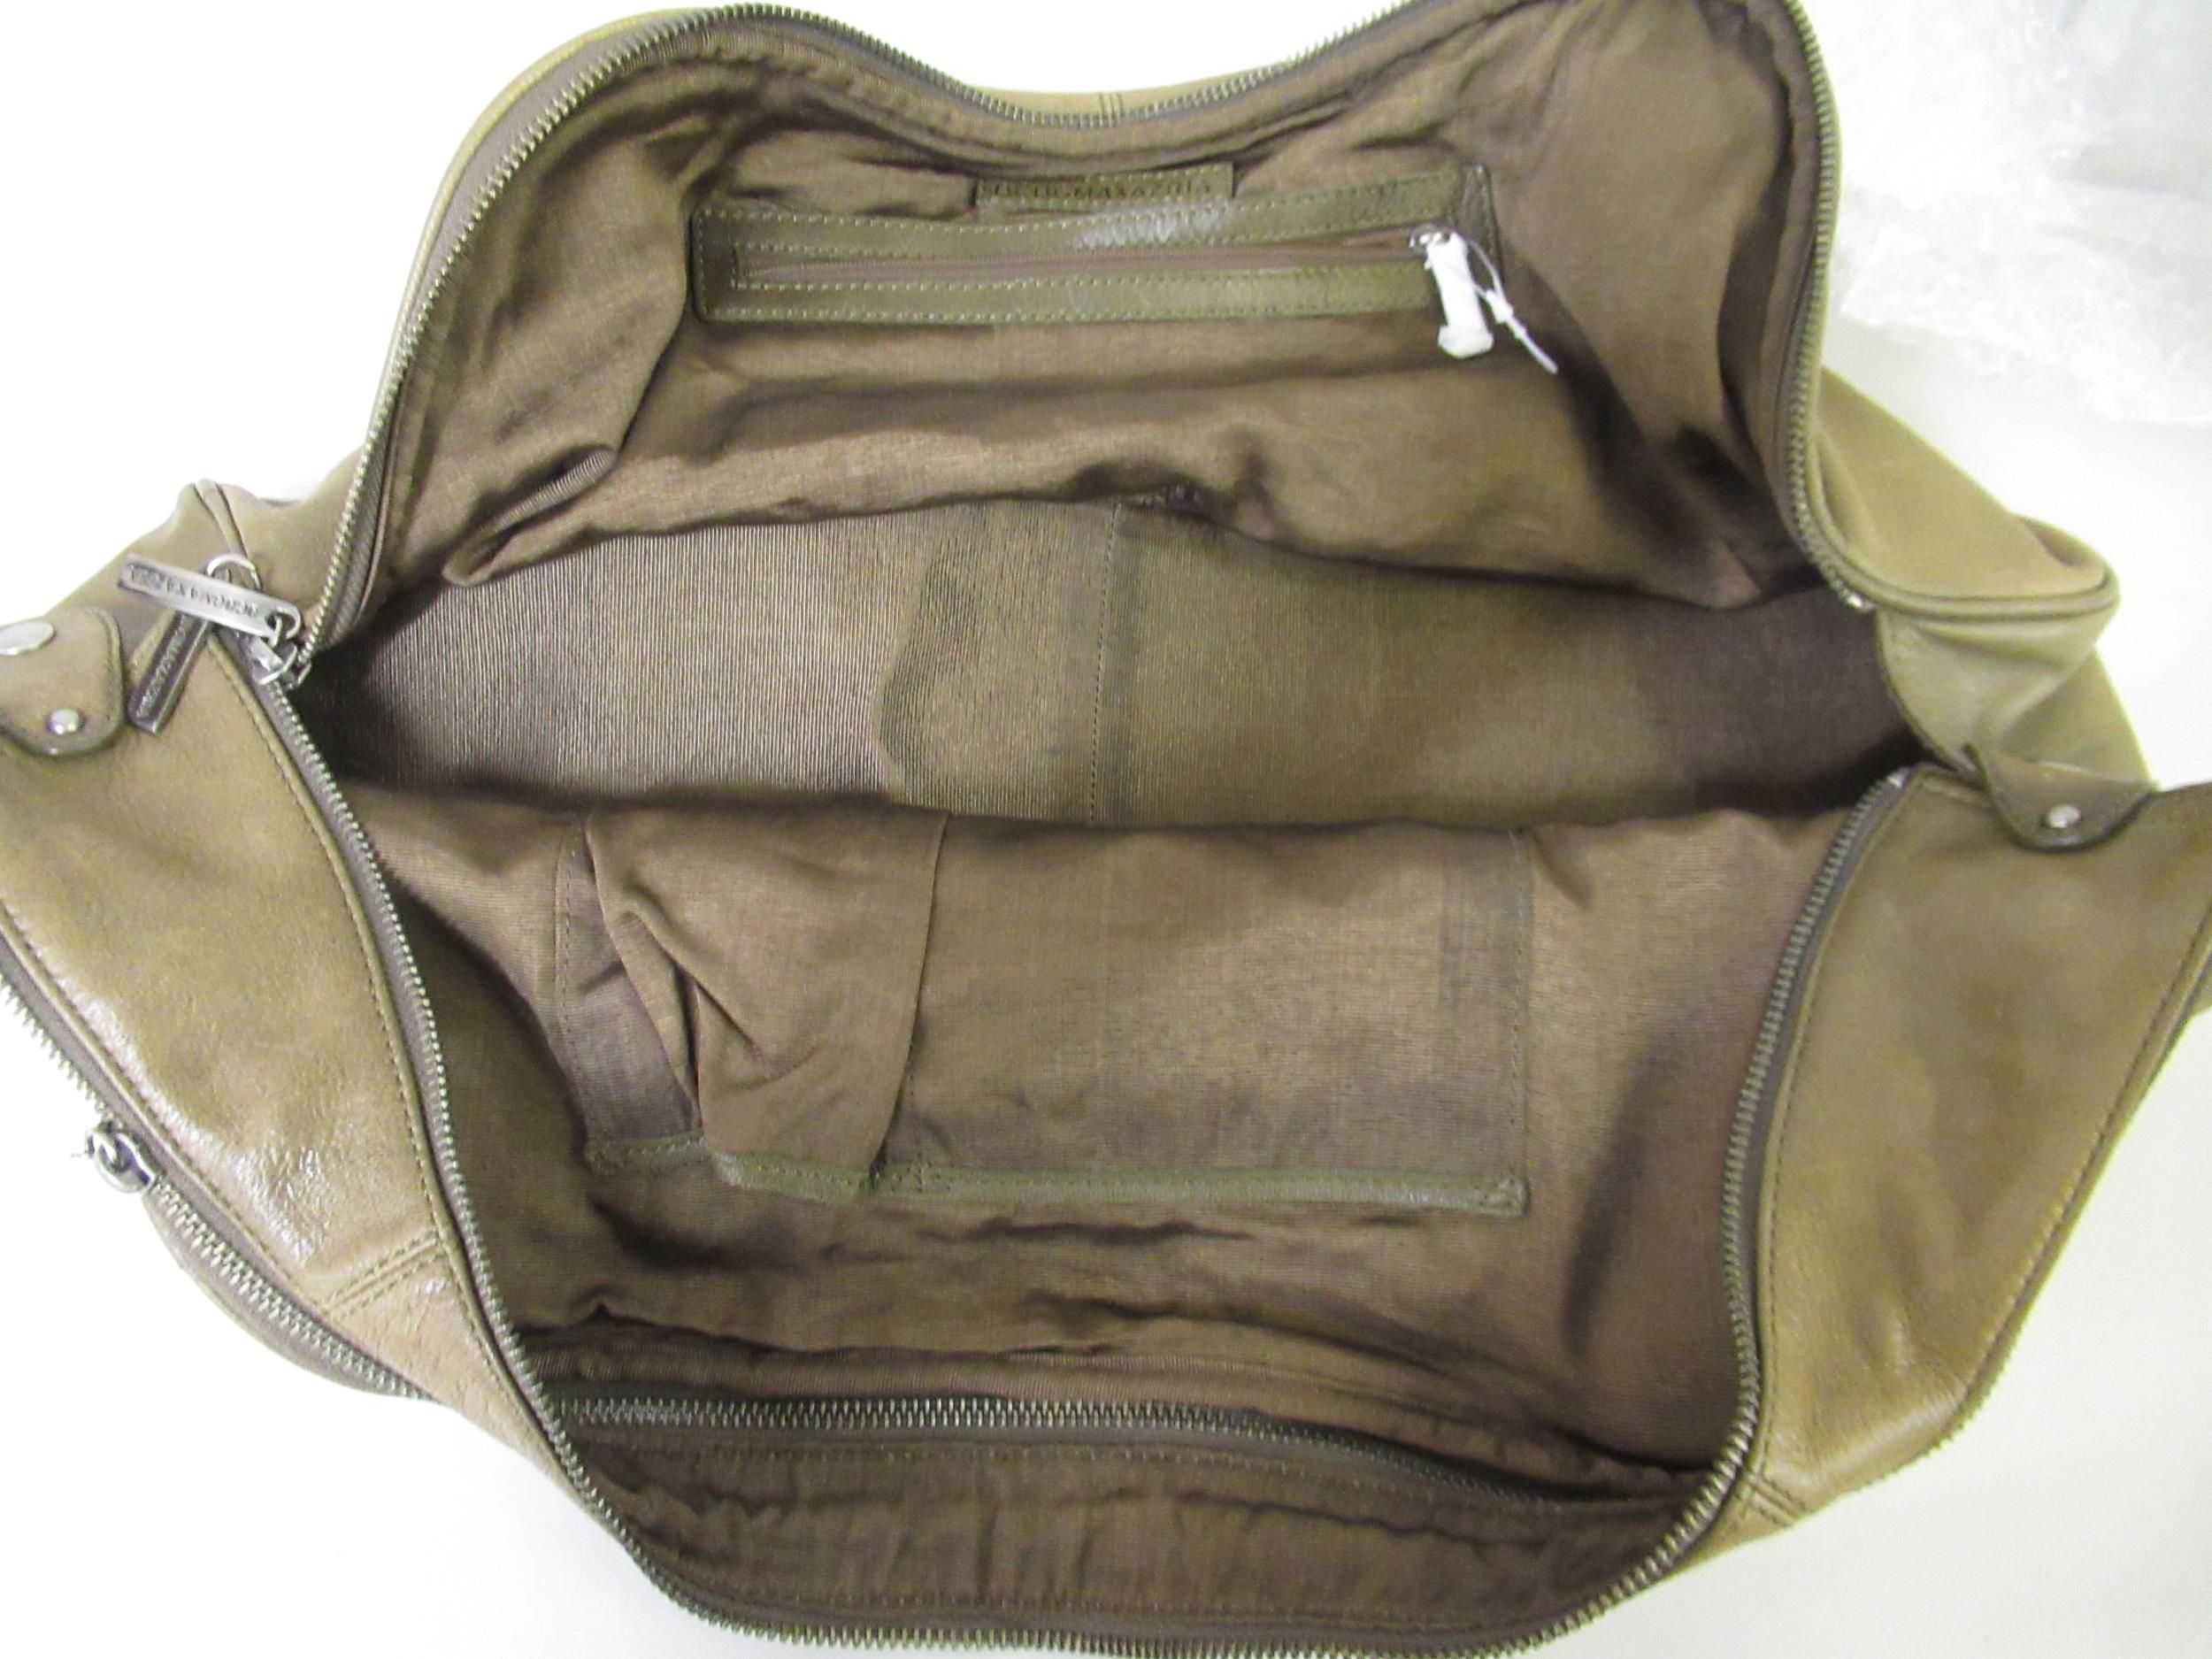 BCBG Max Azria, large green leather shoulder bag One zip tag missing - Image 9 of 9